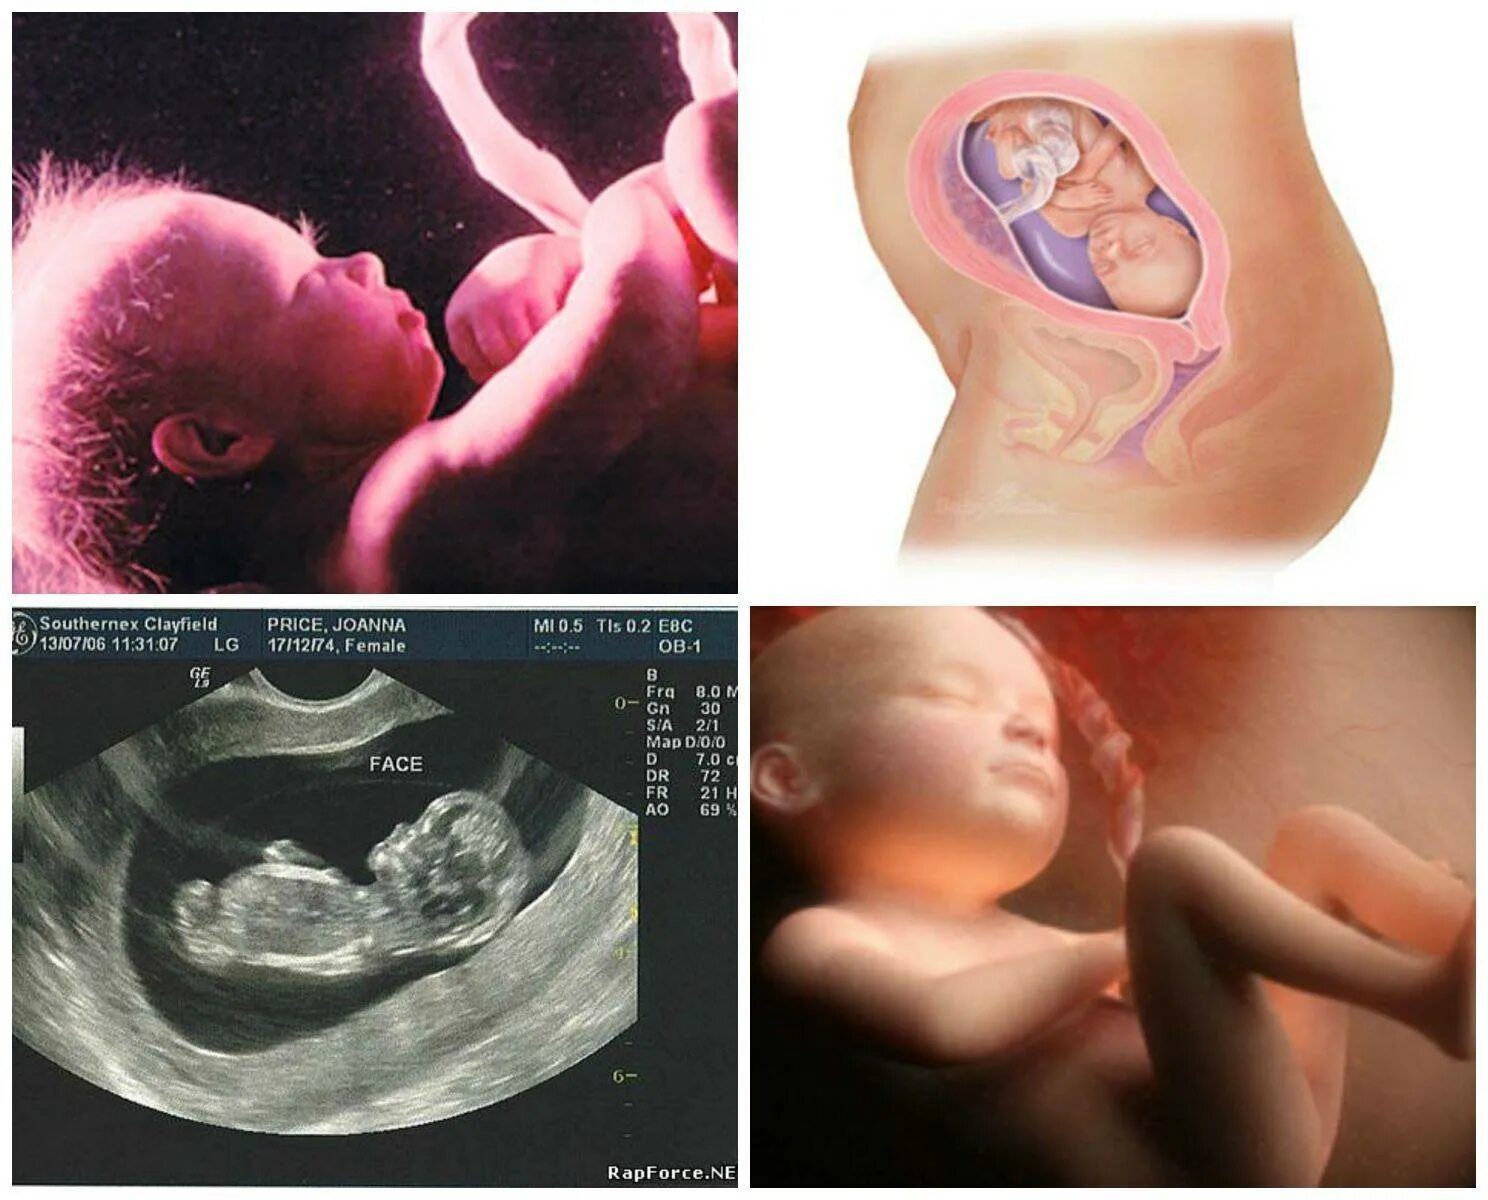 27 Неделя беременности фото плода. Ребенок на 26 неделе беременности УЗИ. 26 Неделя беременности фото плода. Беременность 26-27 недель фото плода.